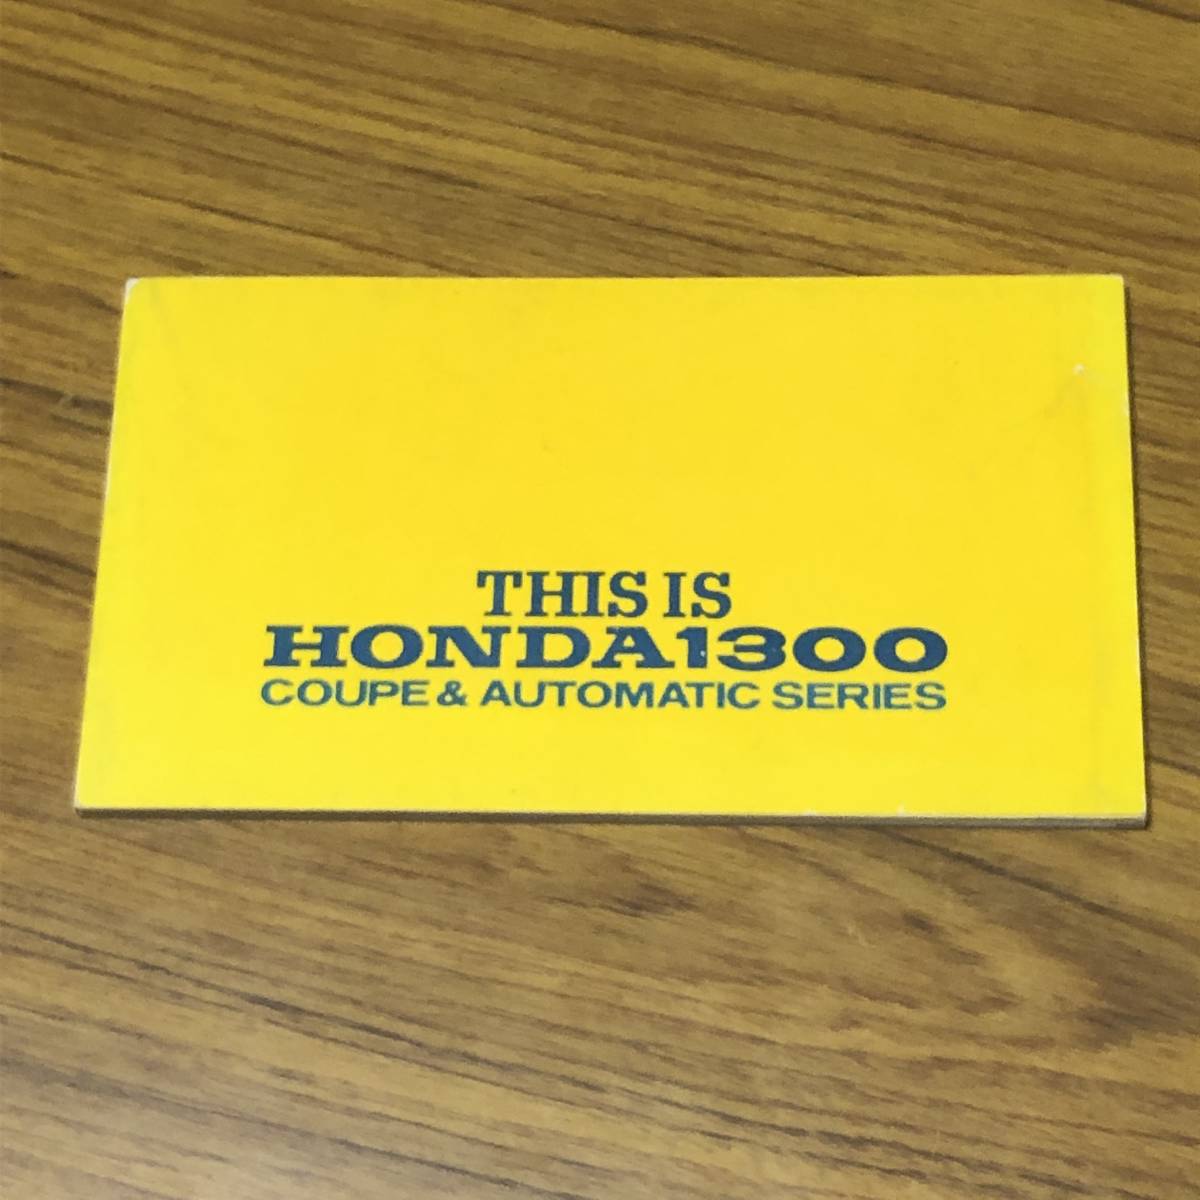 HONDA 1300 COUPE&AUTOMATIC SERIES coupe catalog [A12]